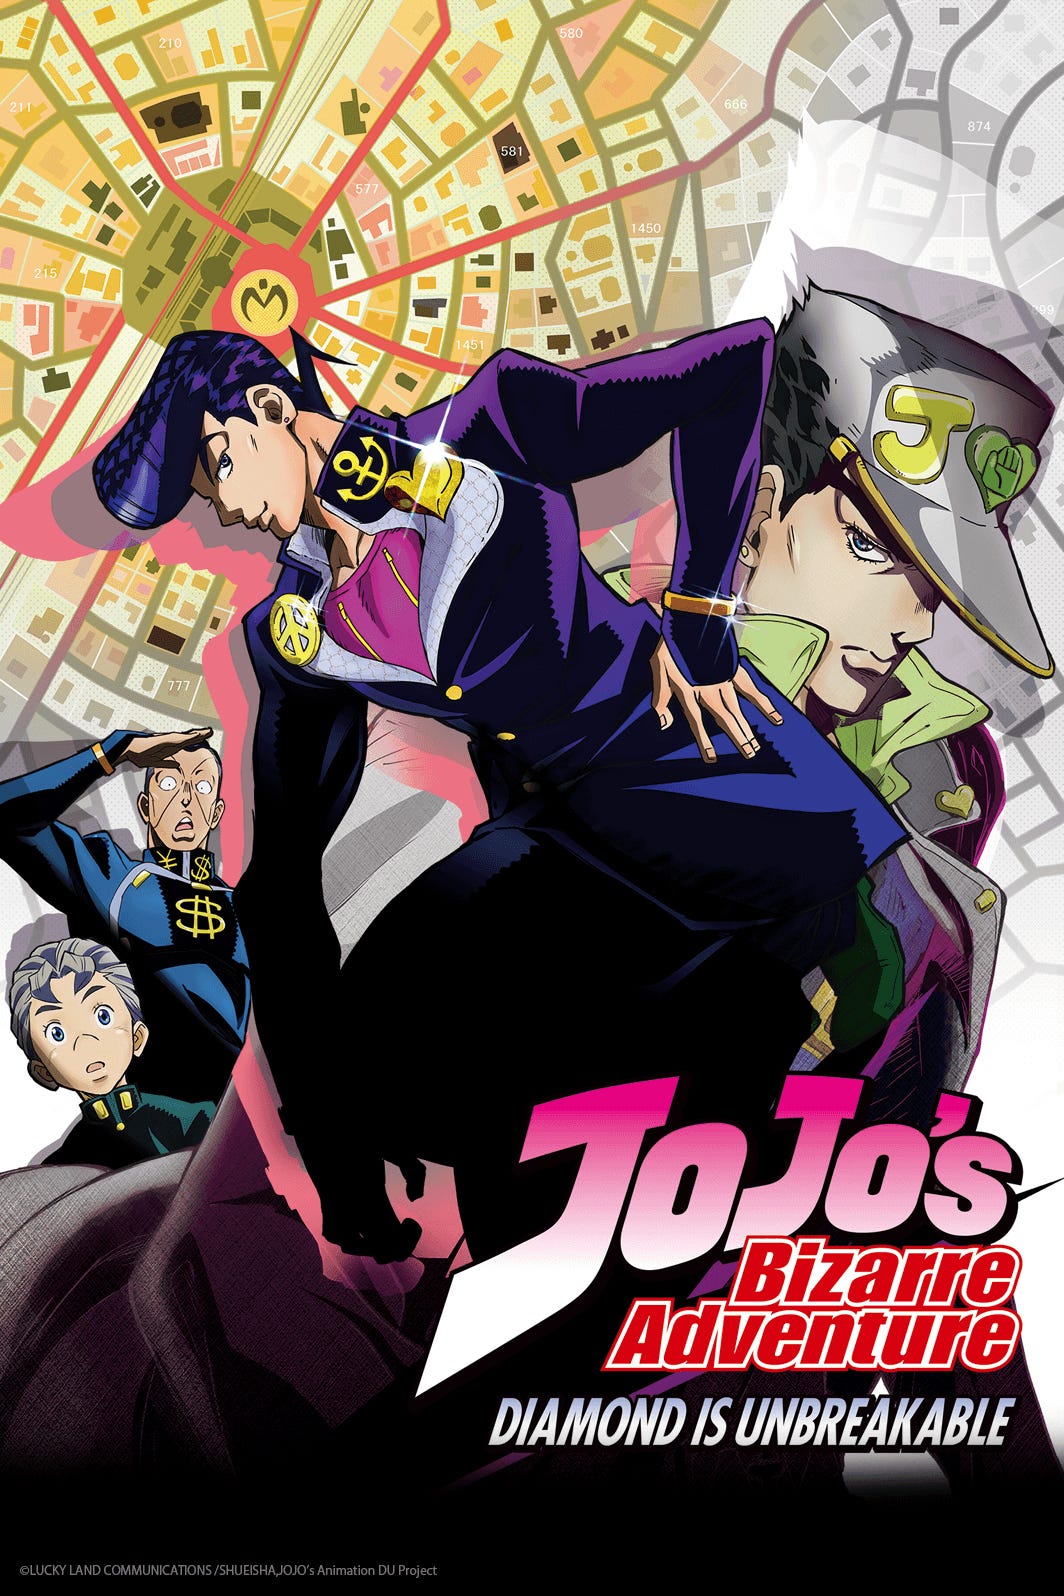 Em que ordem assistir Jojo? #anime #edit #quality #jojosbizarreadv